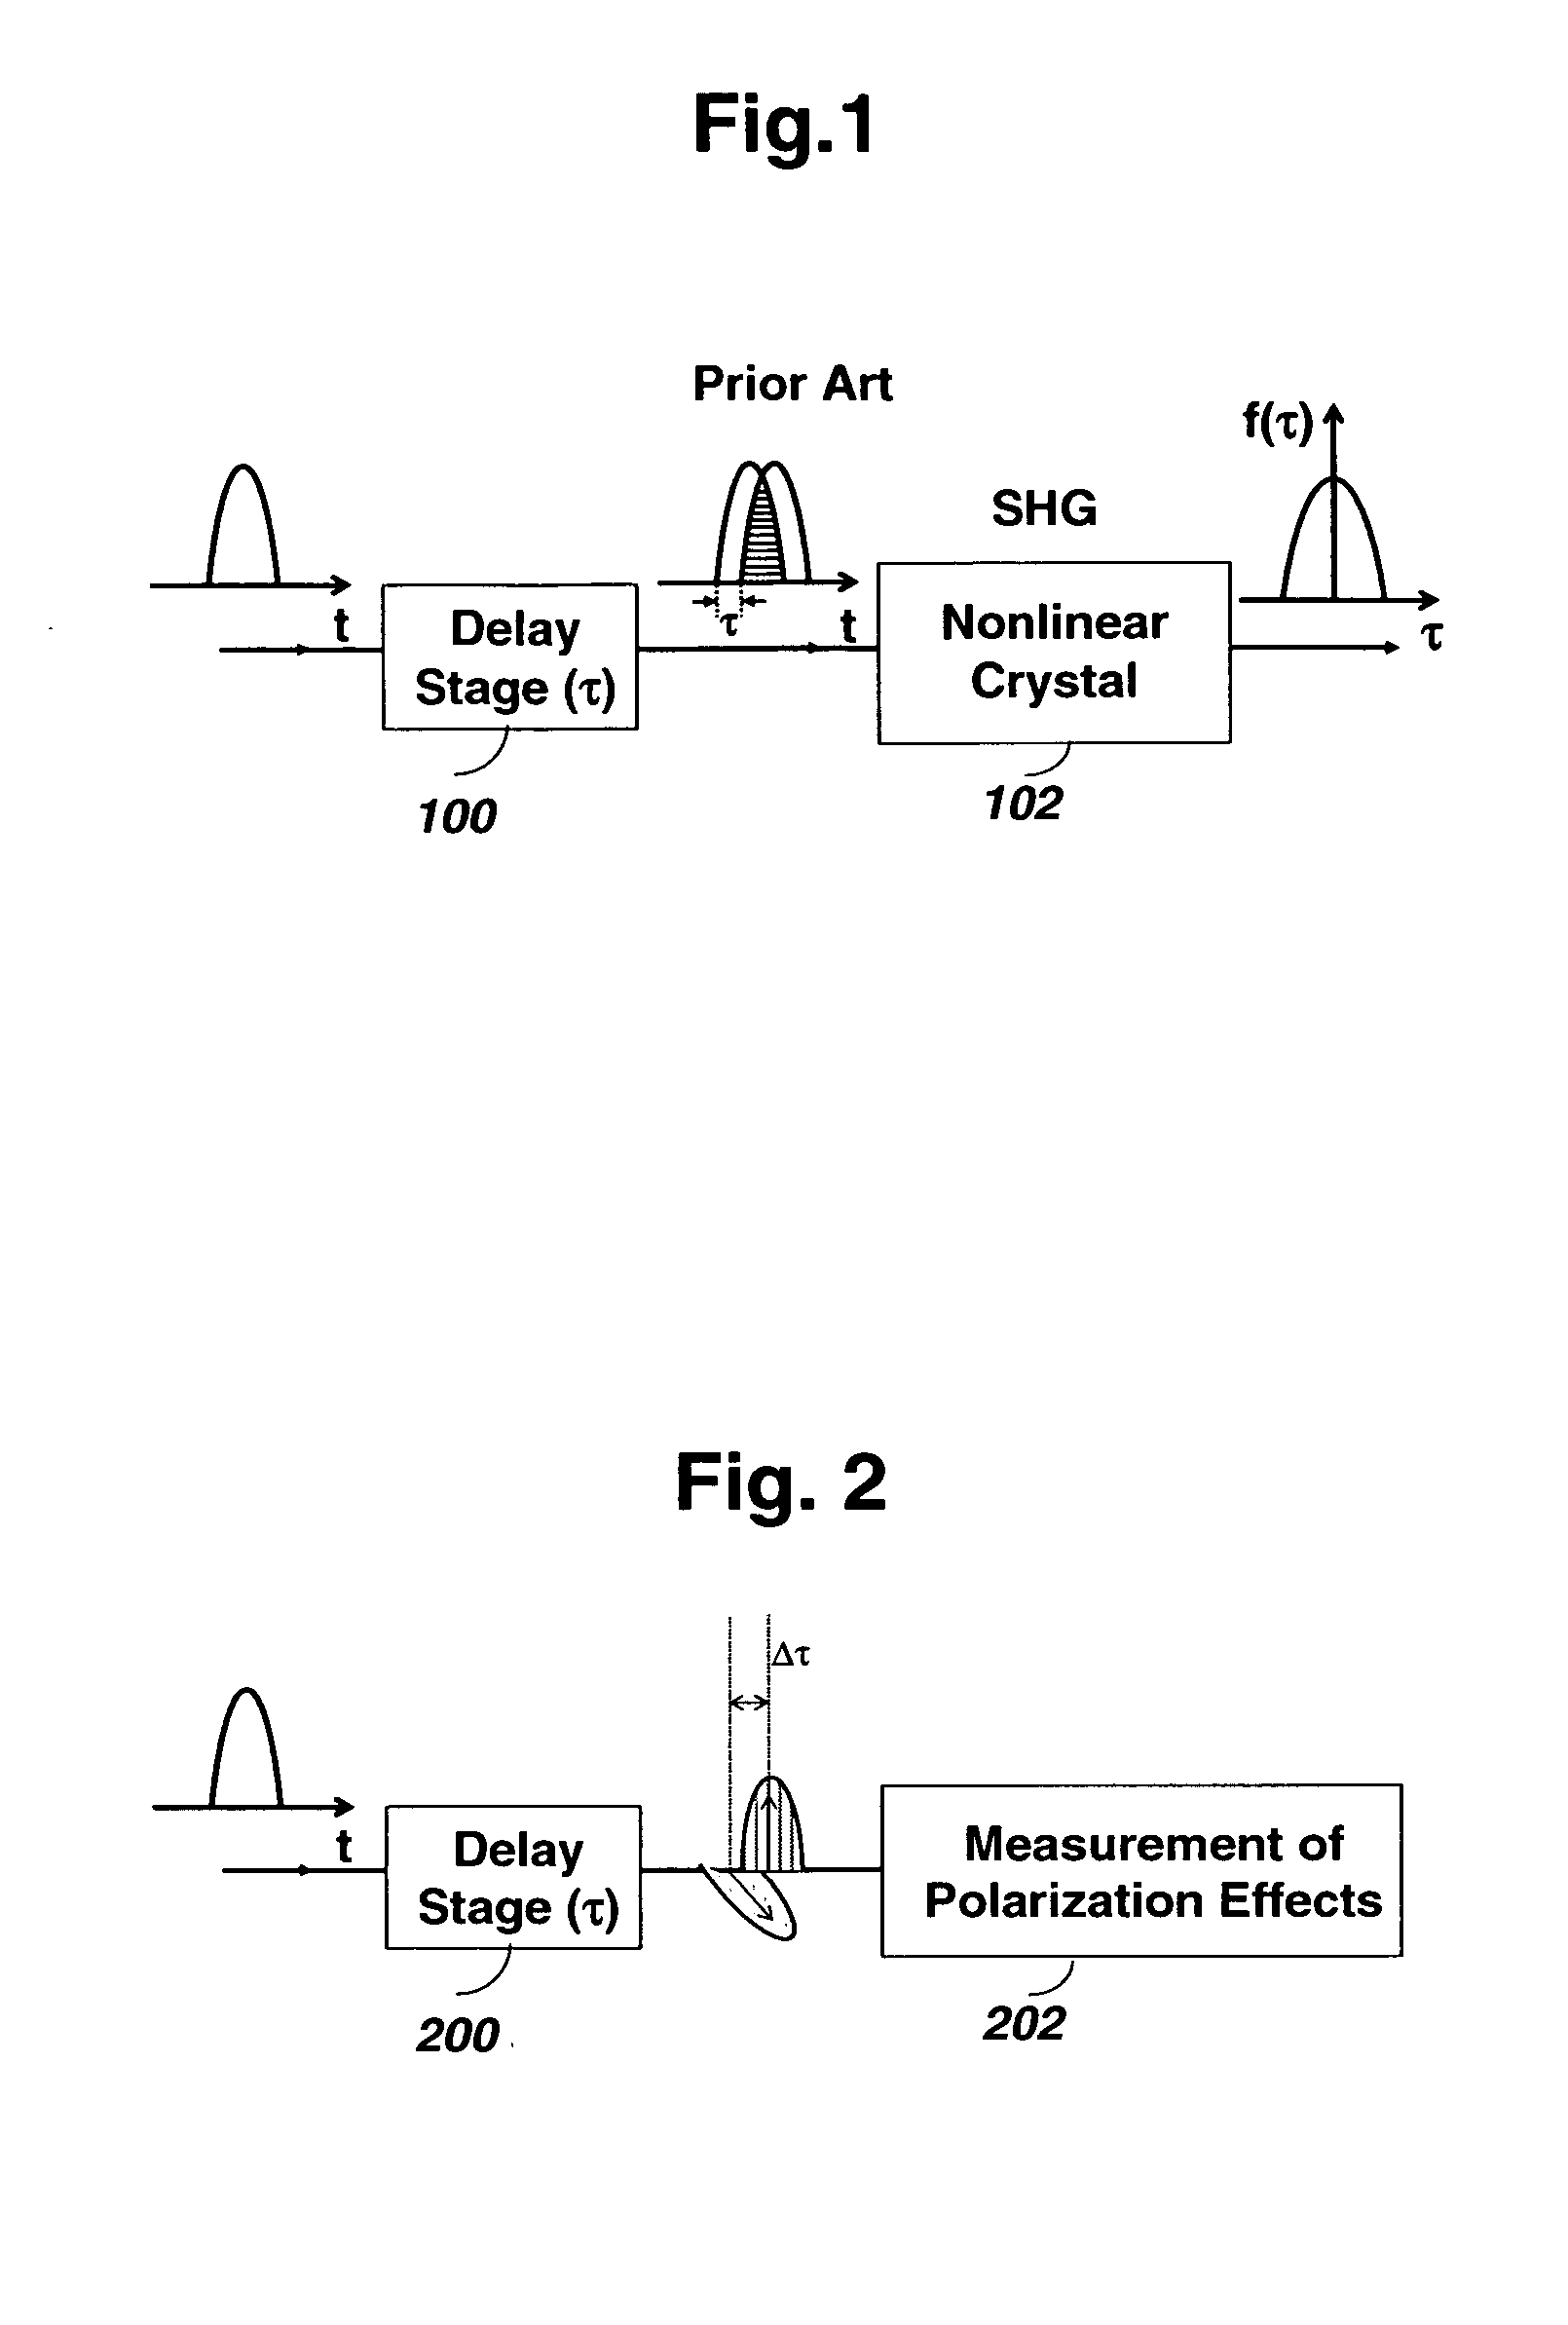 Autocorrelation Technique Based on Measurement of Polarization Effects of Optical Pulses